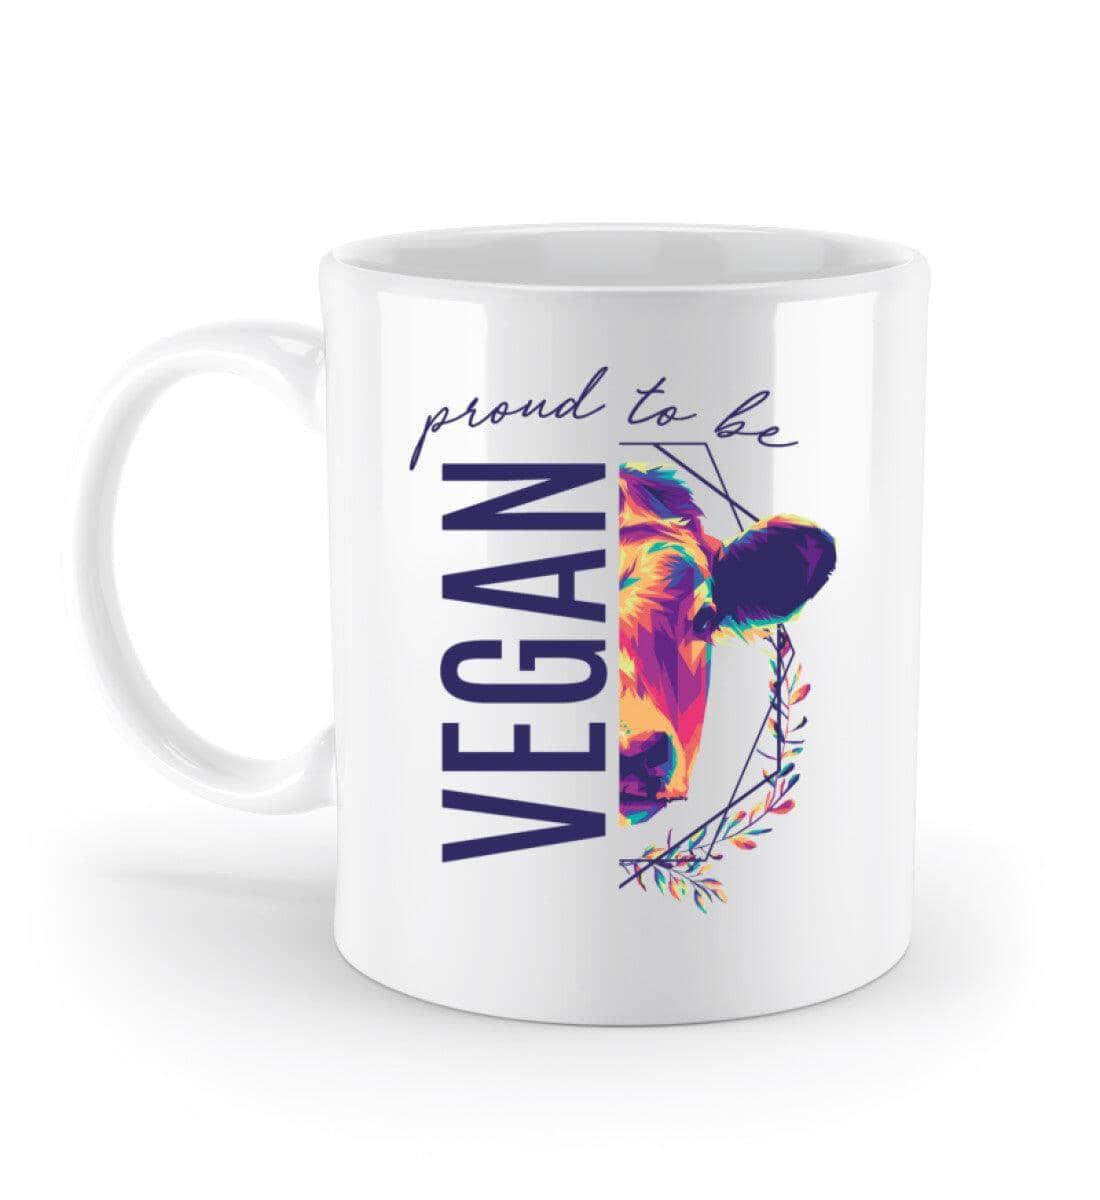 Proud to be vegan - Tasse - Team Vegan © vegan t shirt